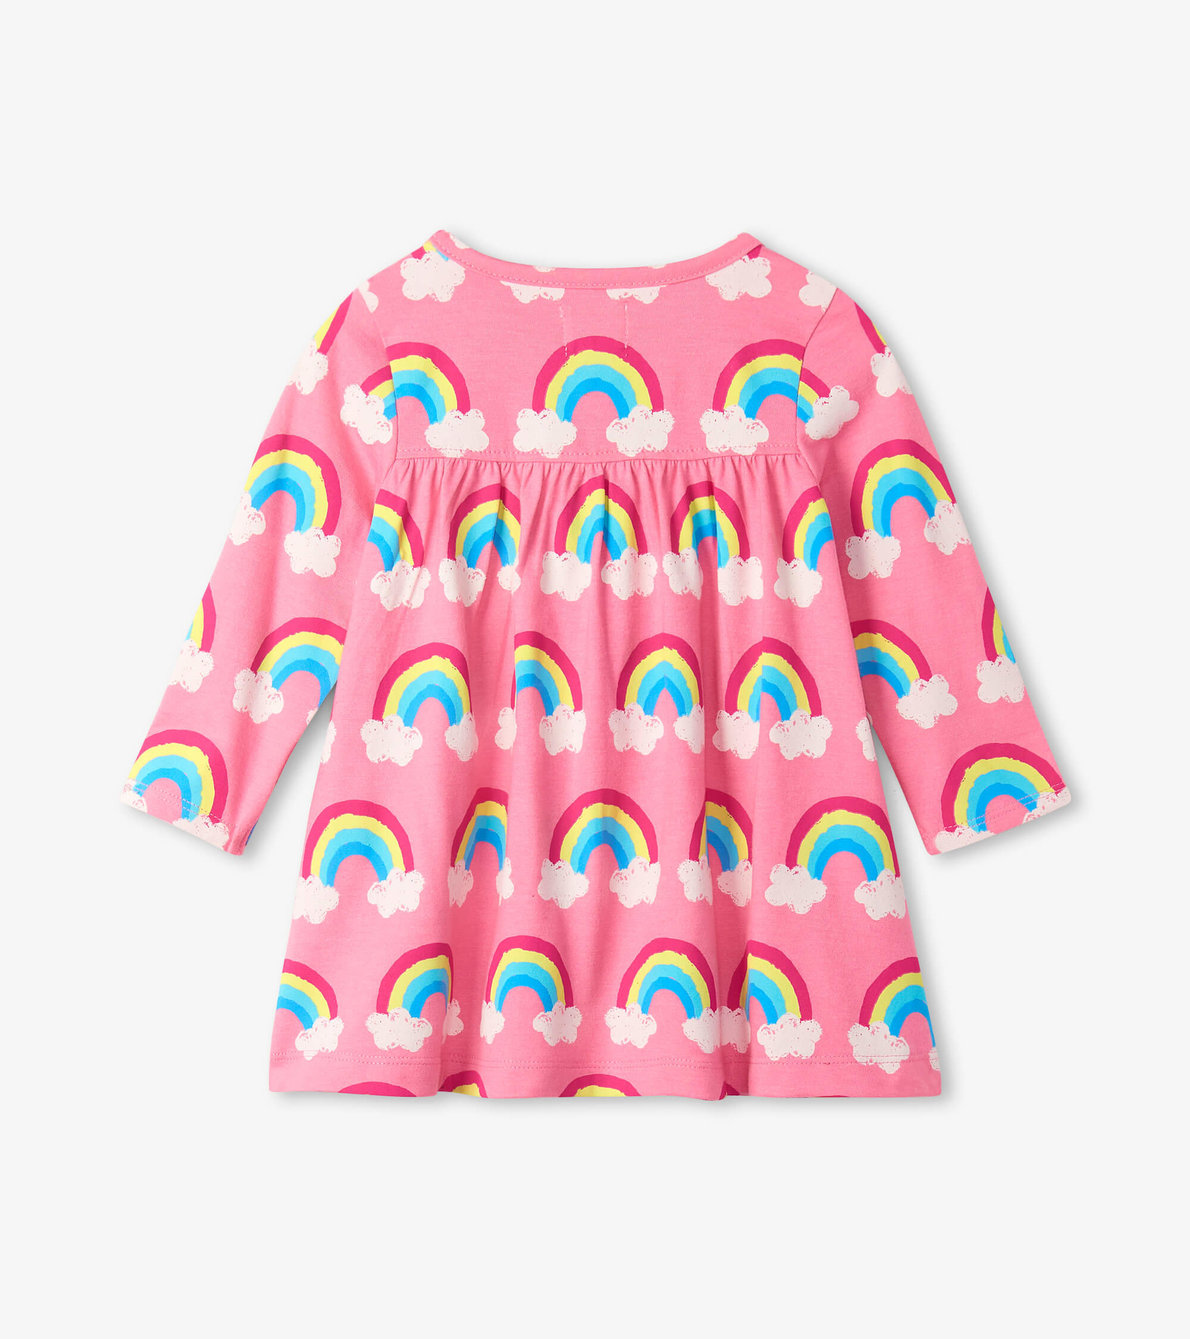 View larger image of Joyful Rainbows Baby Dress